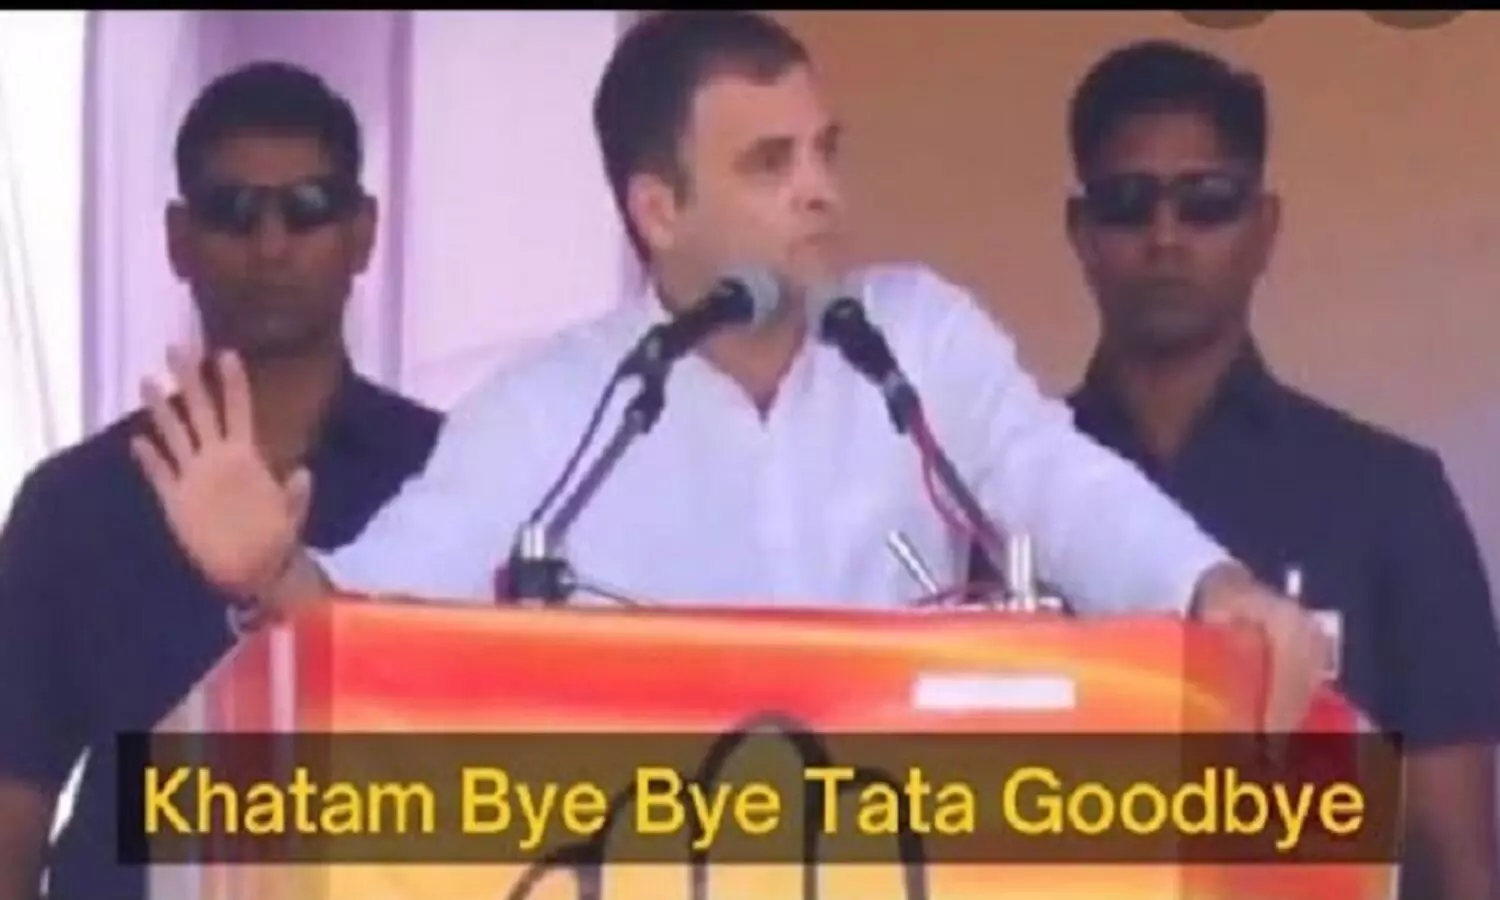 Rahul Gandhi Aata 22 Rupee Ltr Video: राहुल गांधी ने कहा आटा 22 रुपए लीटर, वीडियो वायरल हो गया